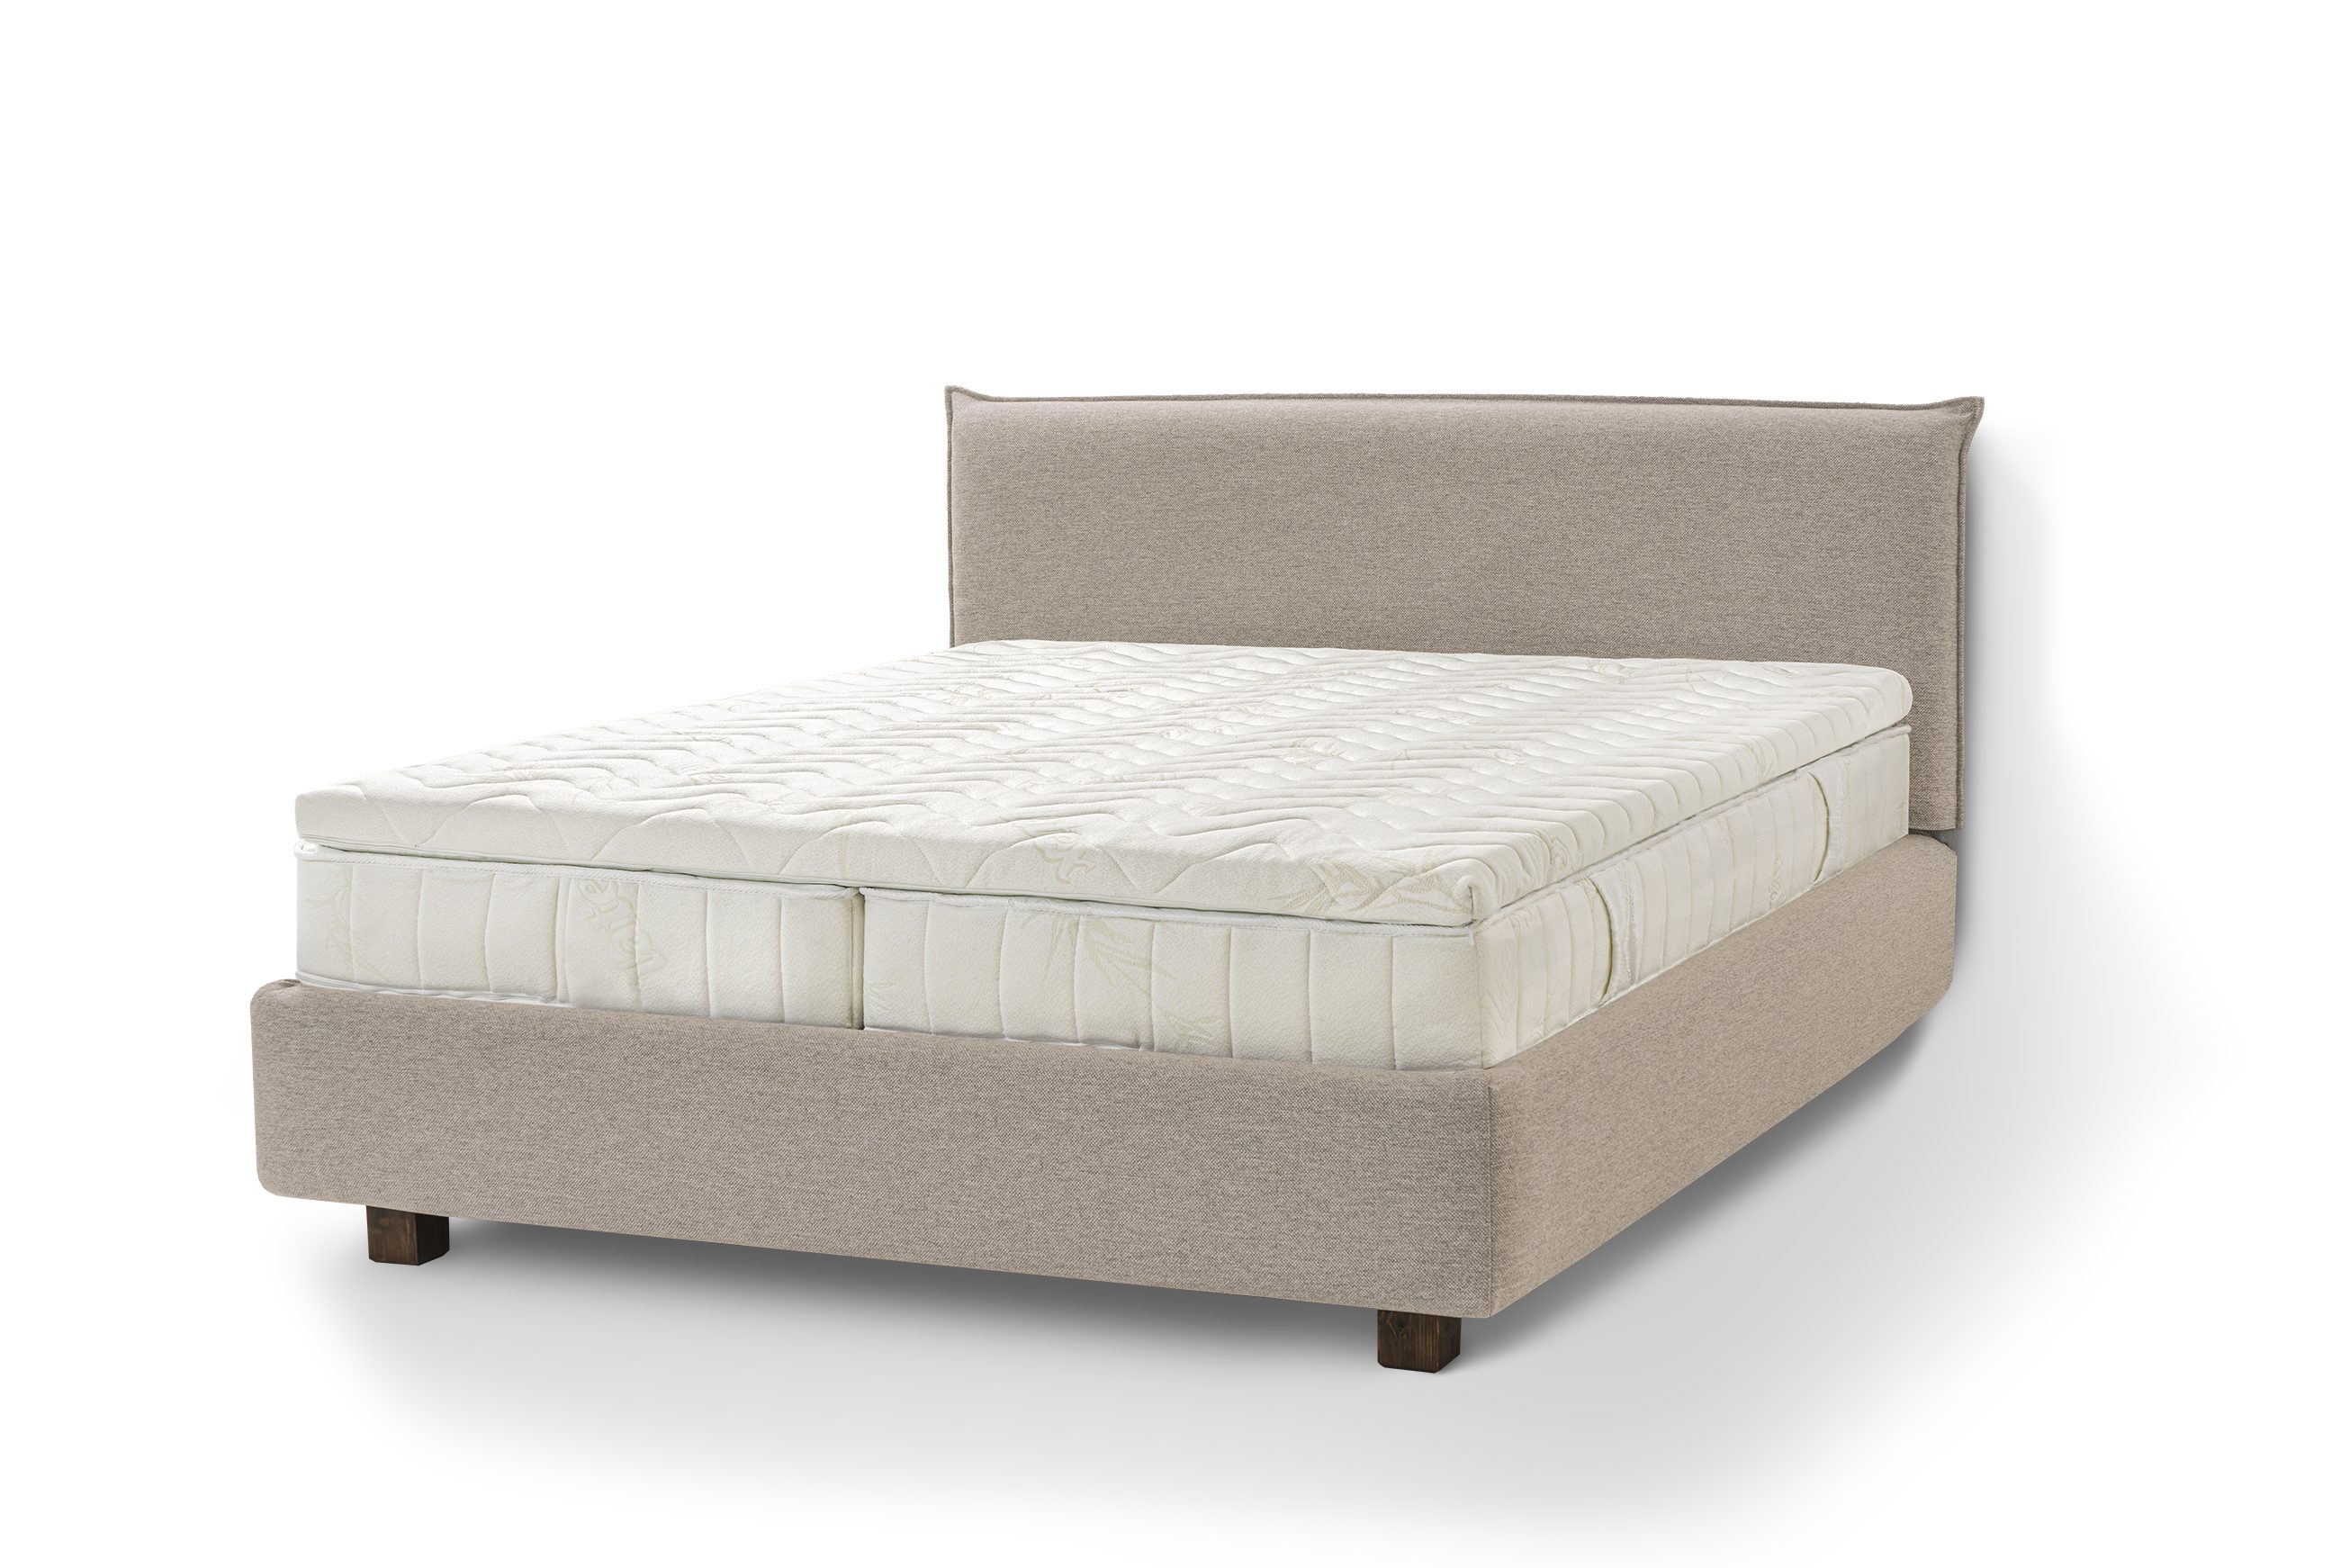 Moderni Letti Holzbett Beige hochwertigem Puro, Bett hergestellt aus Massivholz Siena